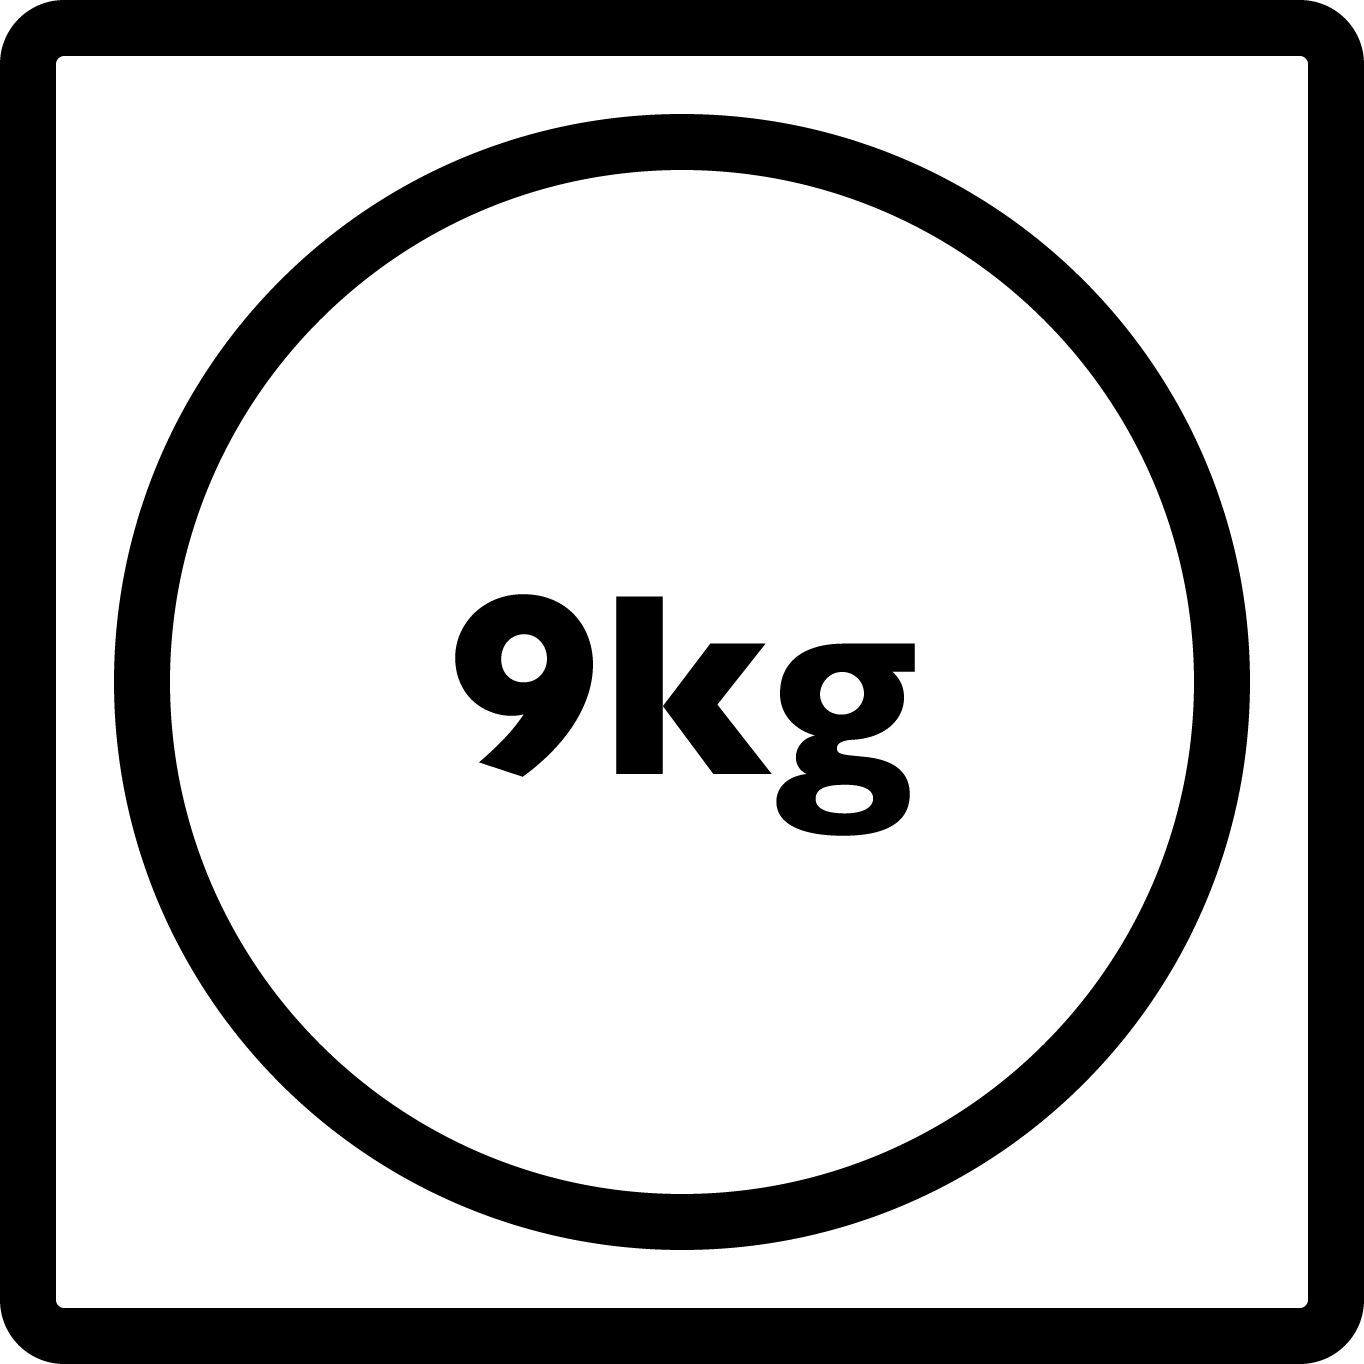 9kg